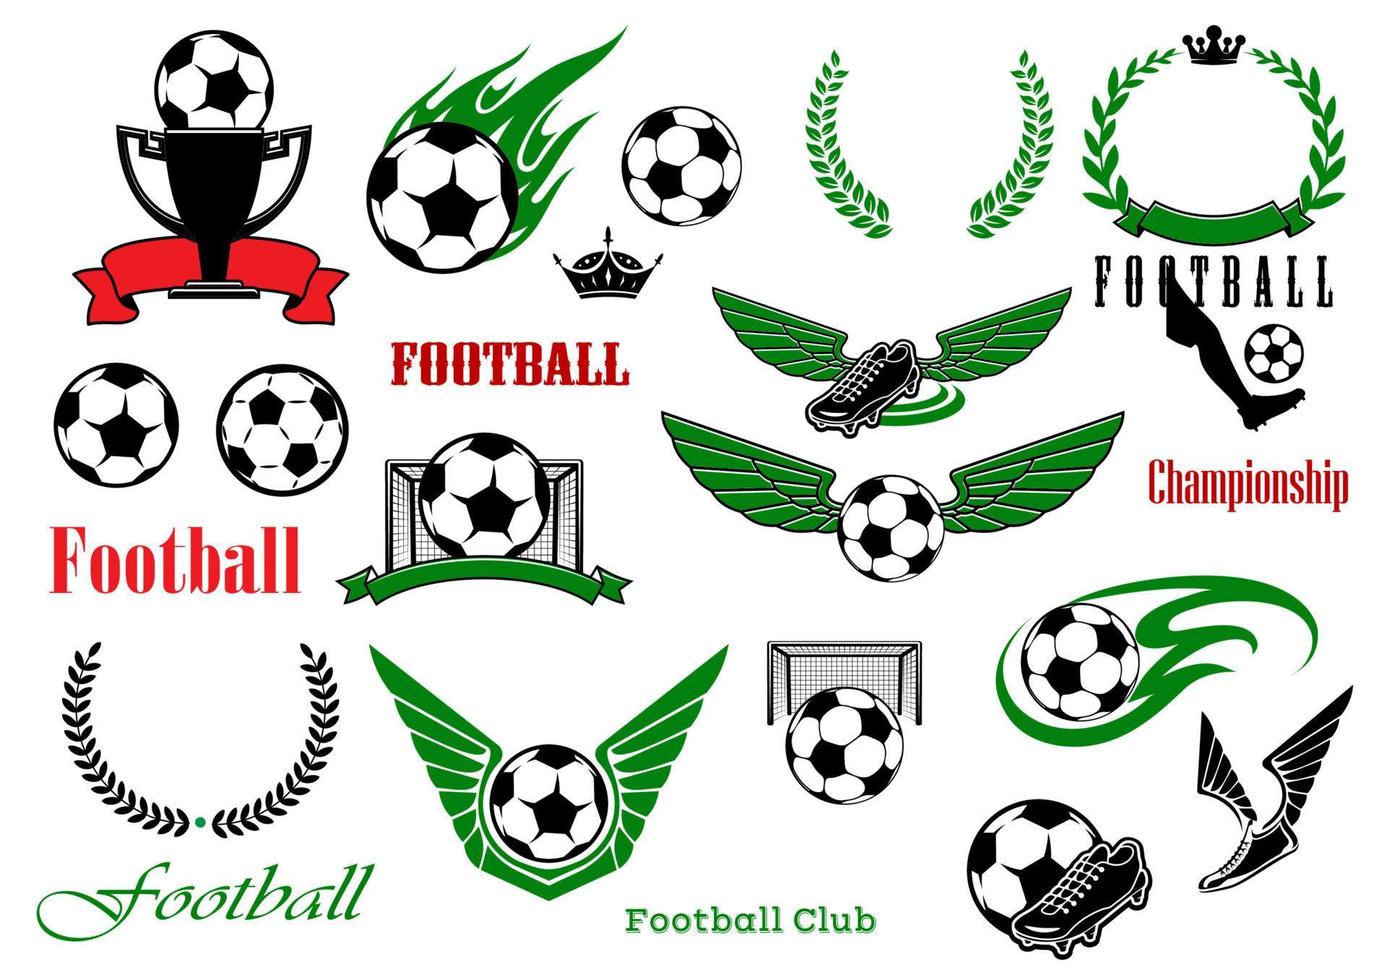 Football or soccer sport game design elements vector